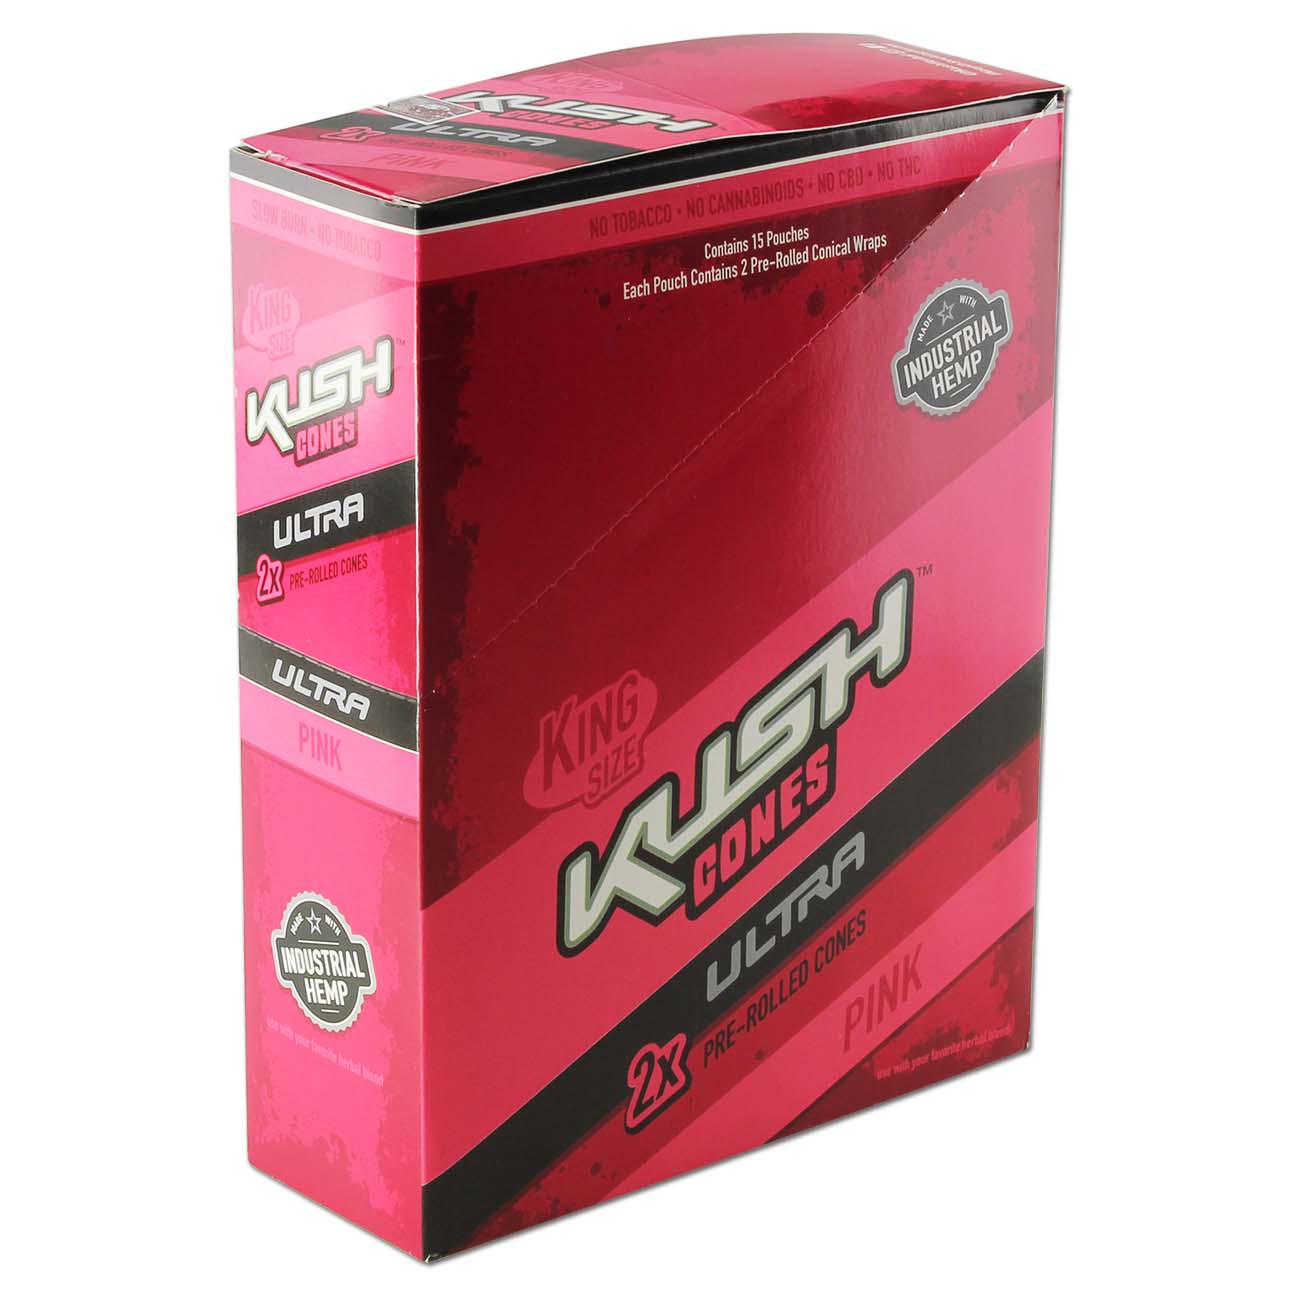 True Hemp Blunt Kush Conical Herbal Hemp Wraps 2 ks Ultra Pink